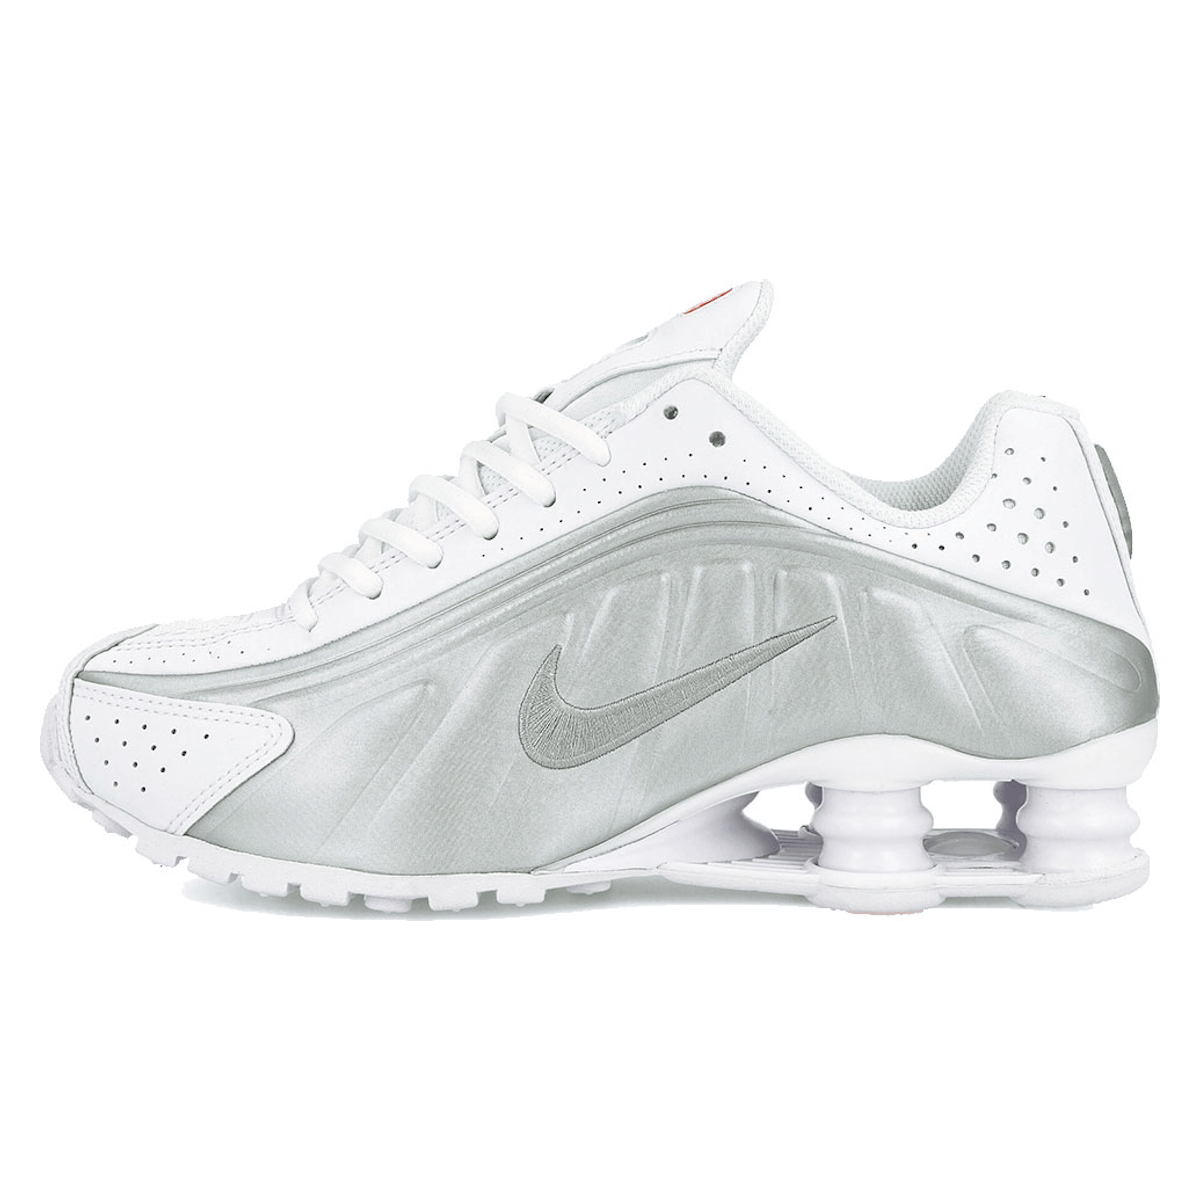 Nike Shox R4 White Metallic Silver (GS)